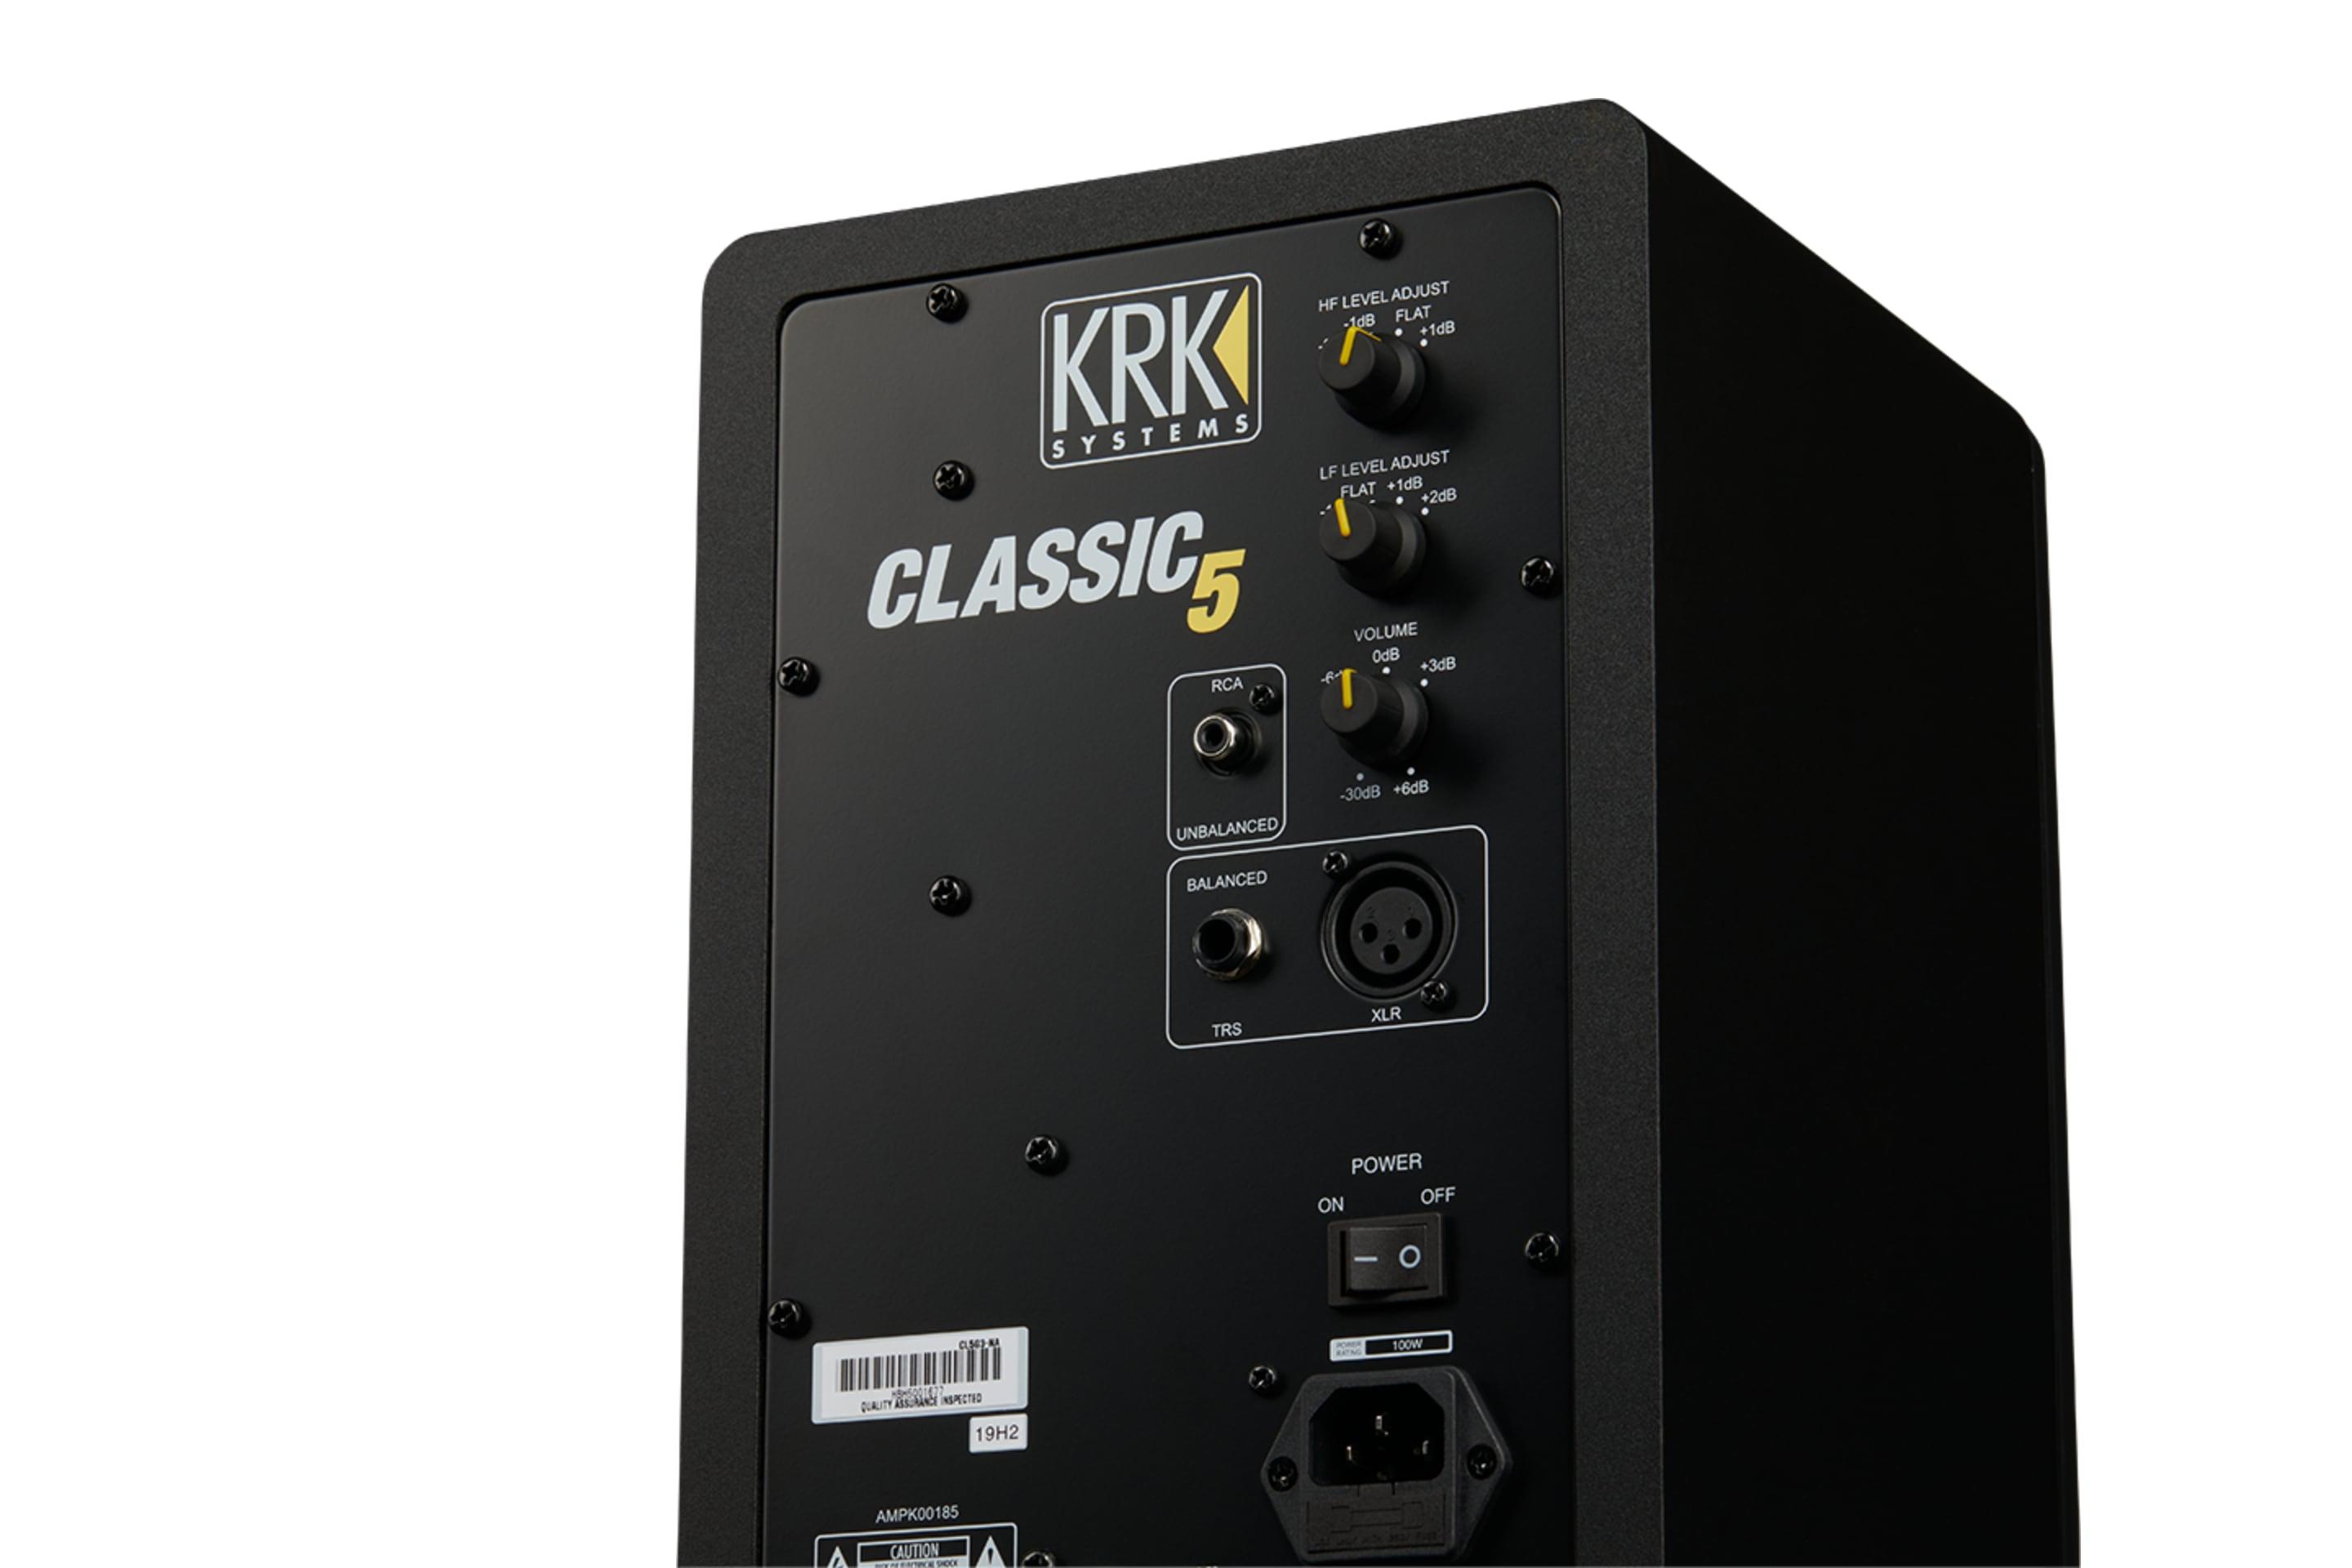 KRK Classic 5 Angle back